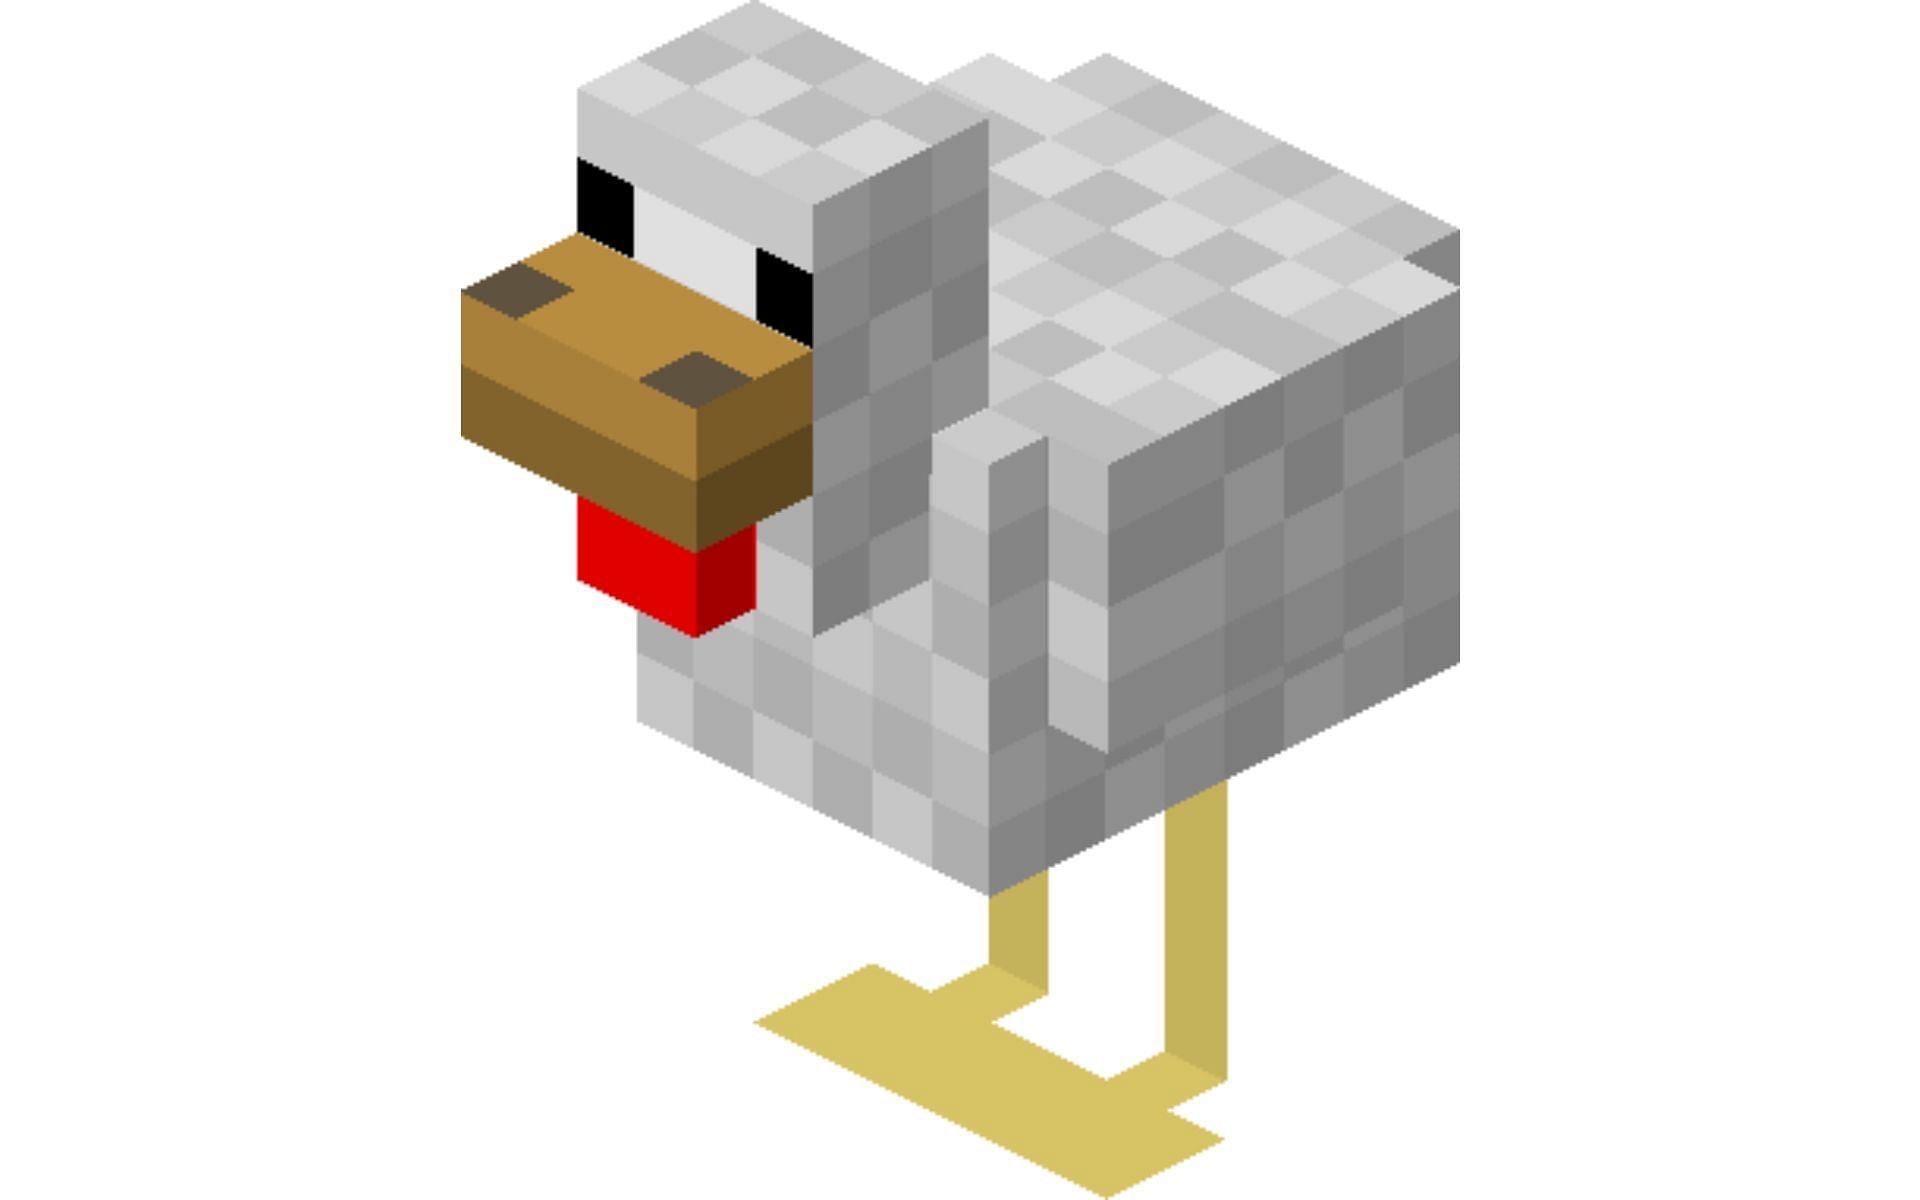 In-game model of the Chicken (Image via Fandom)